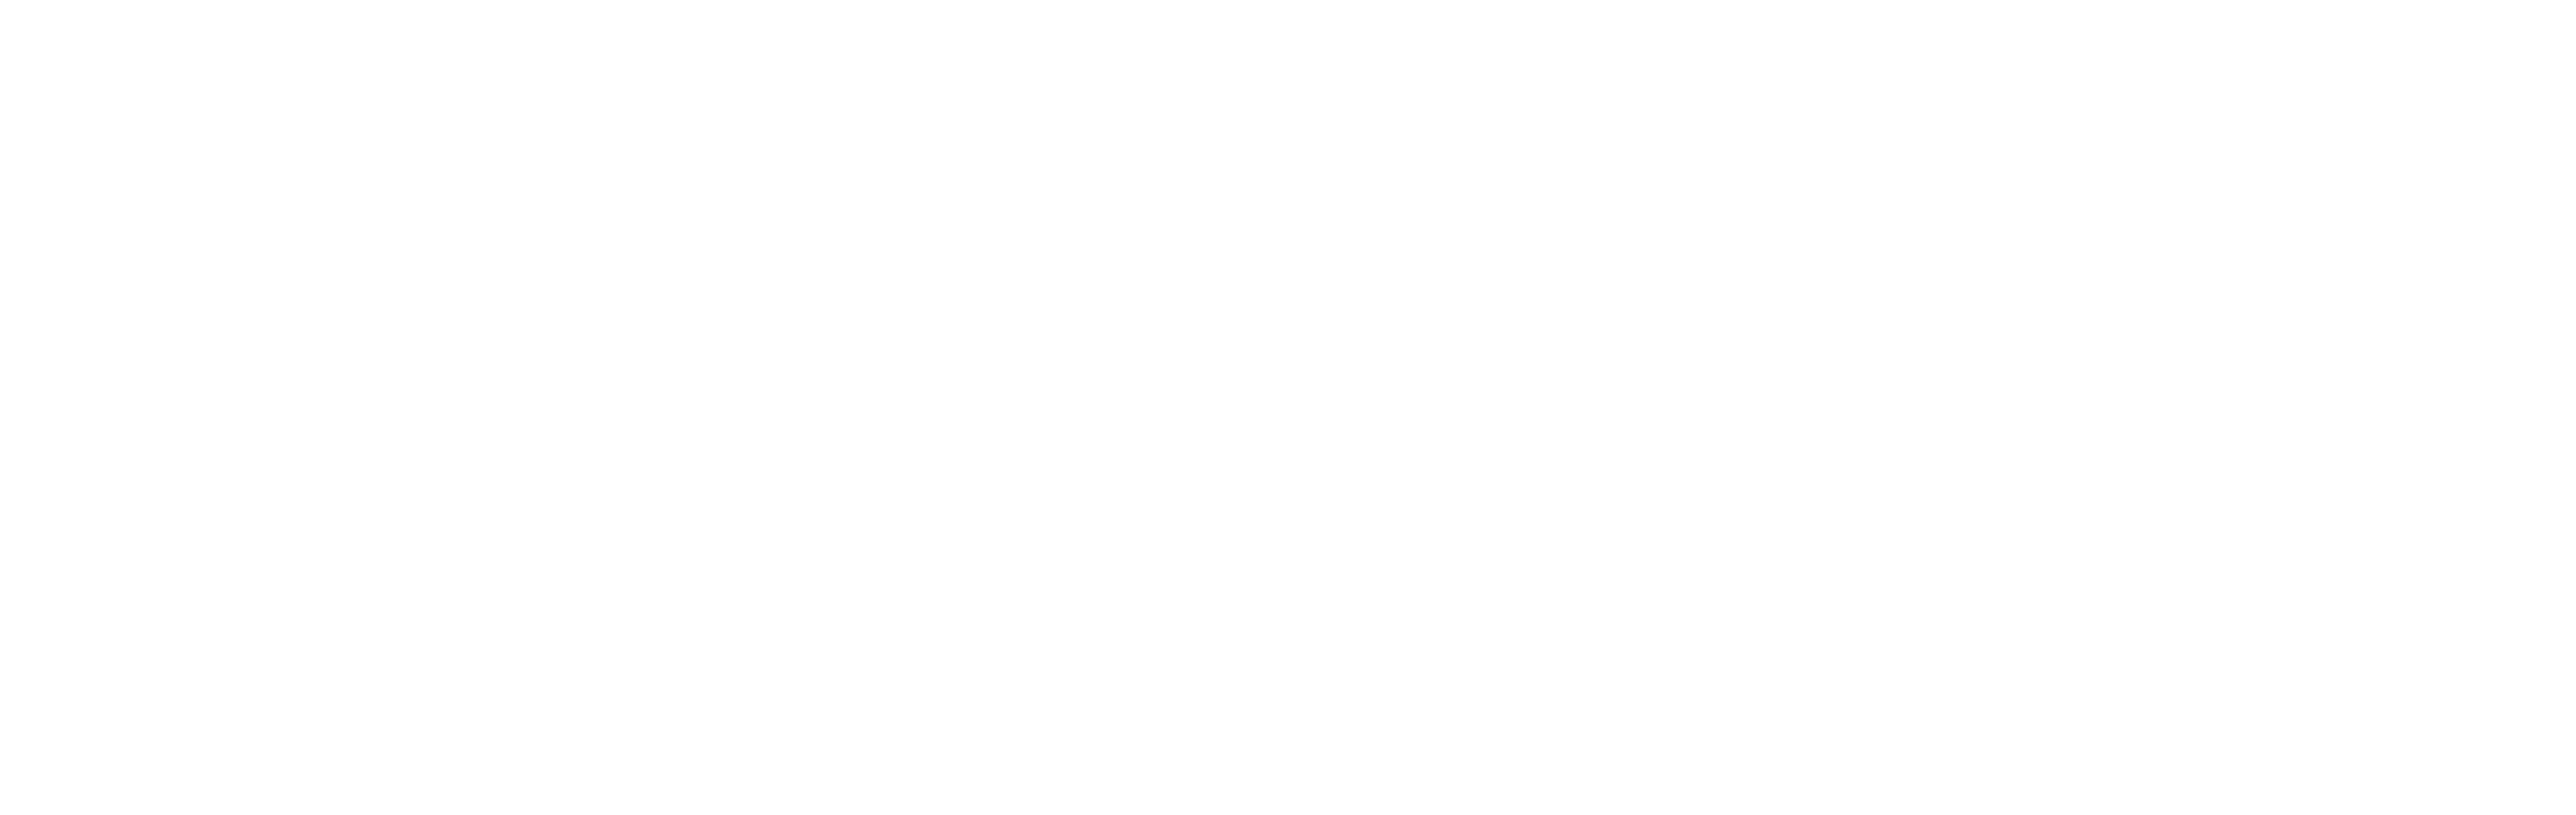 Masternodes.buzz